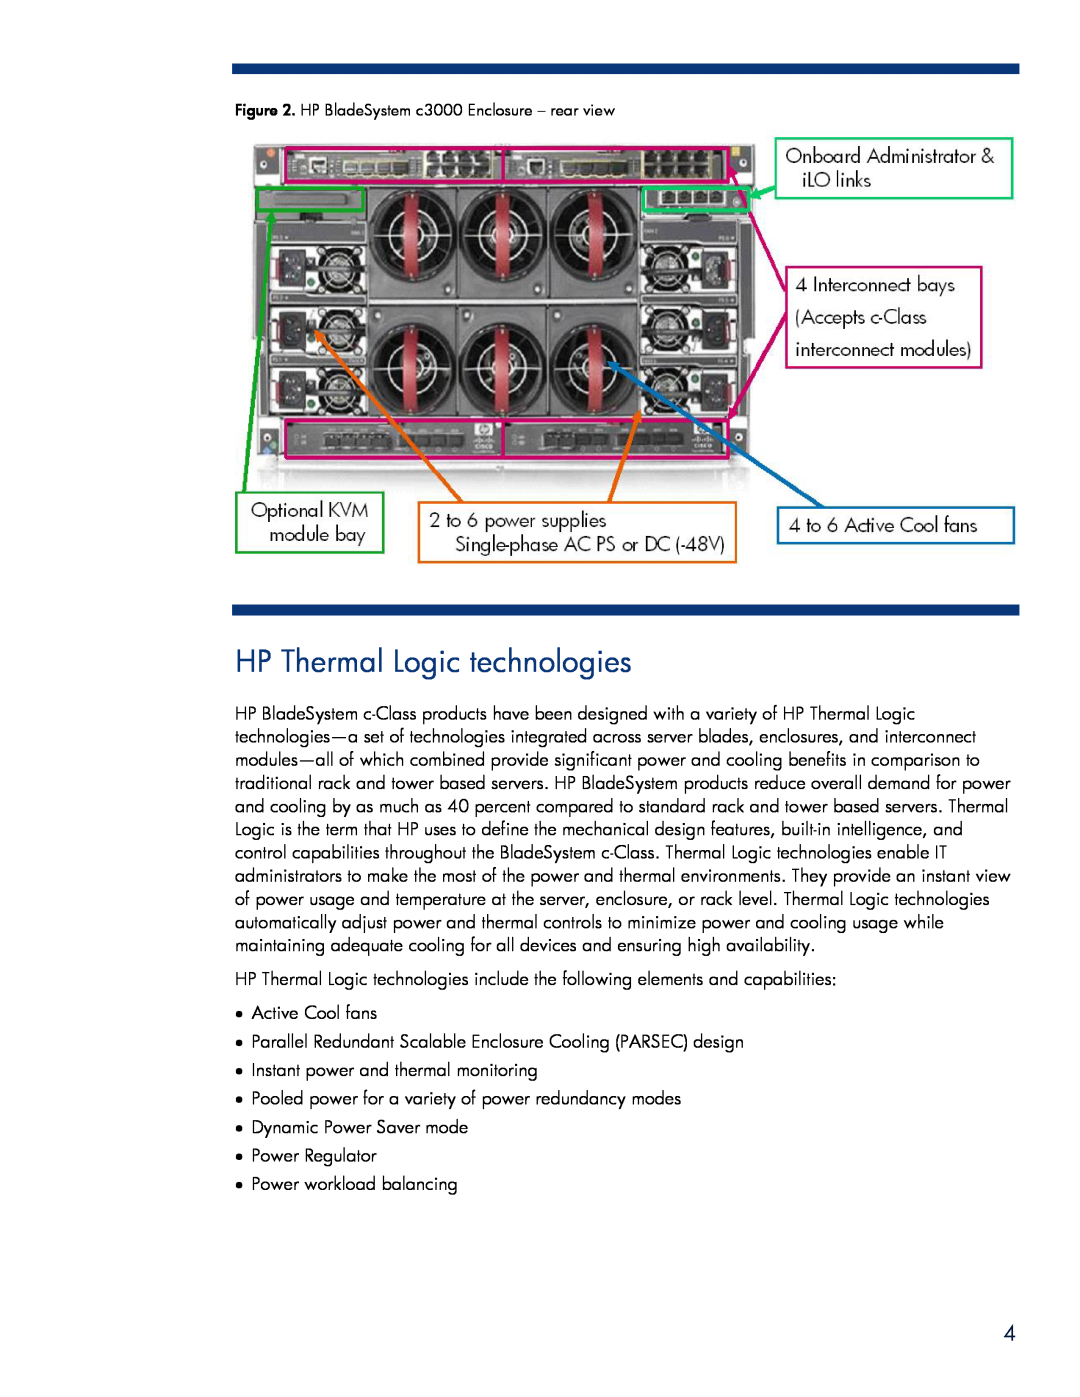 HP BladeSystem Enclosure technologies manual HP Thermal Logic technologies 